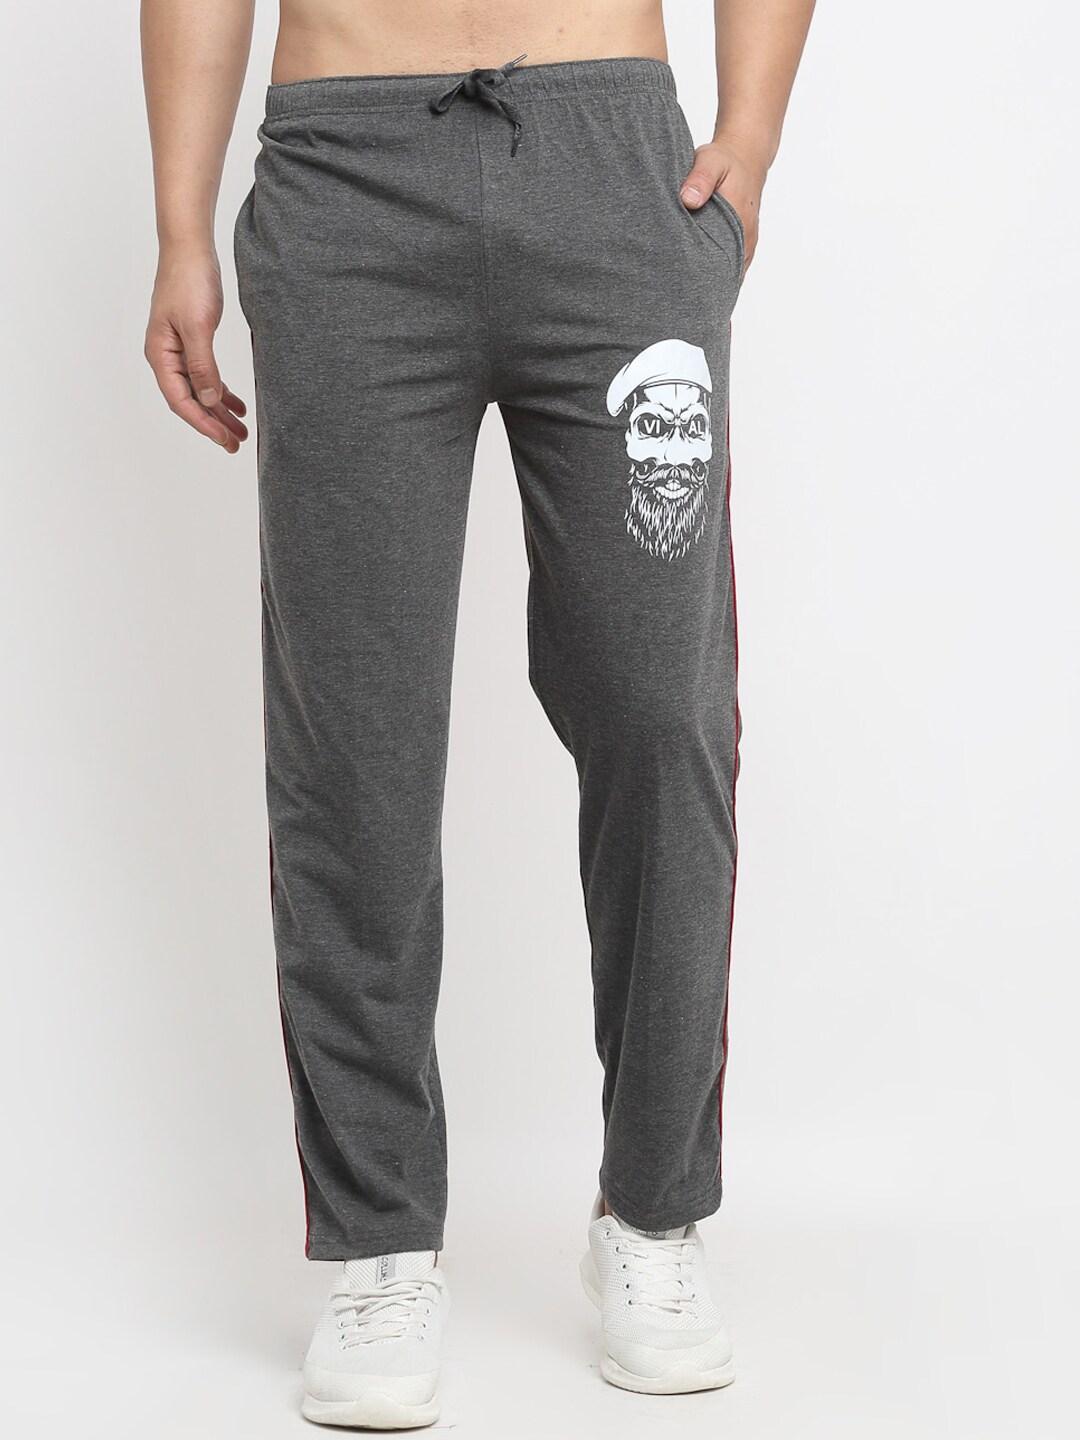 vimal-jonney-men-grey-&-white-printed-track-pants